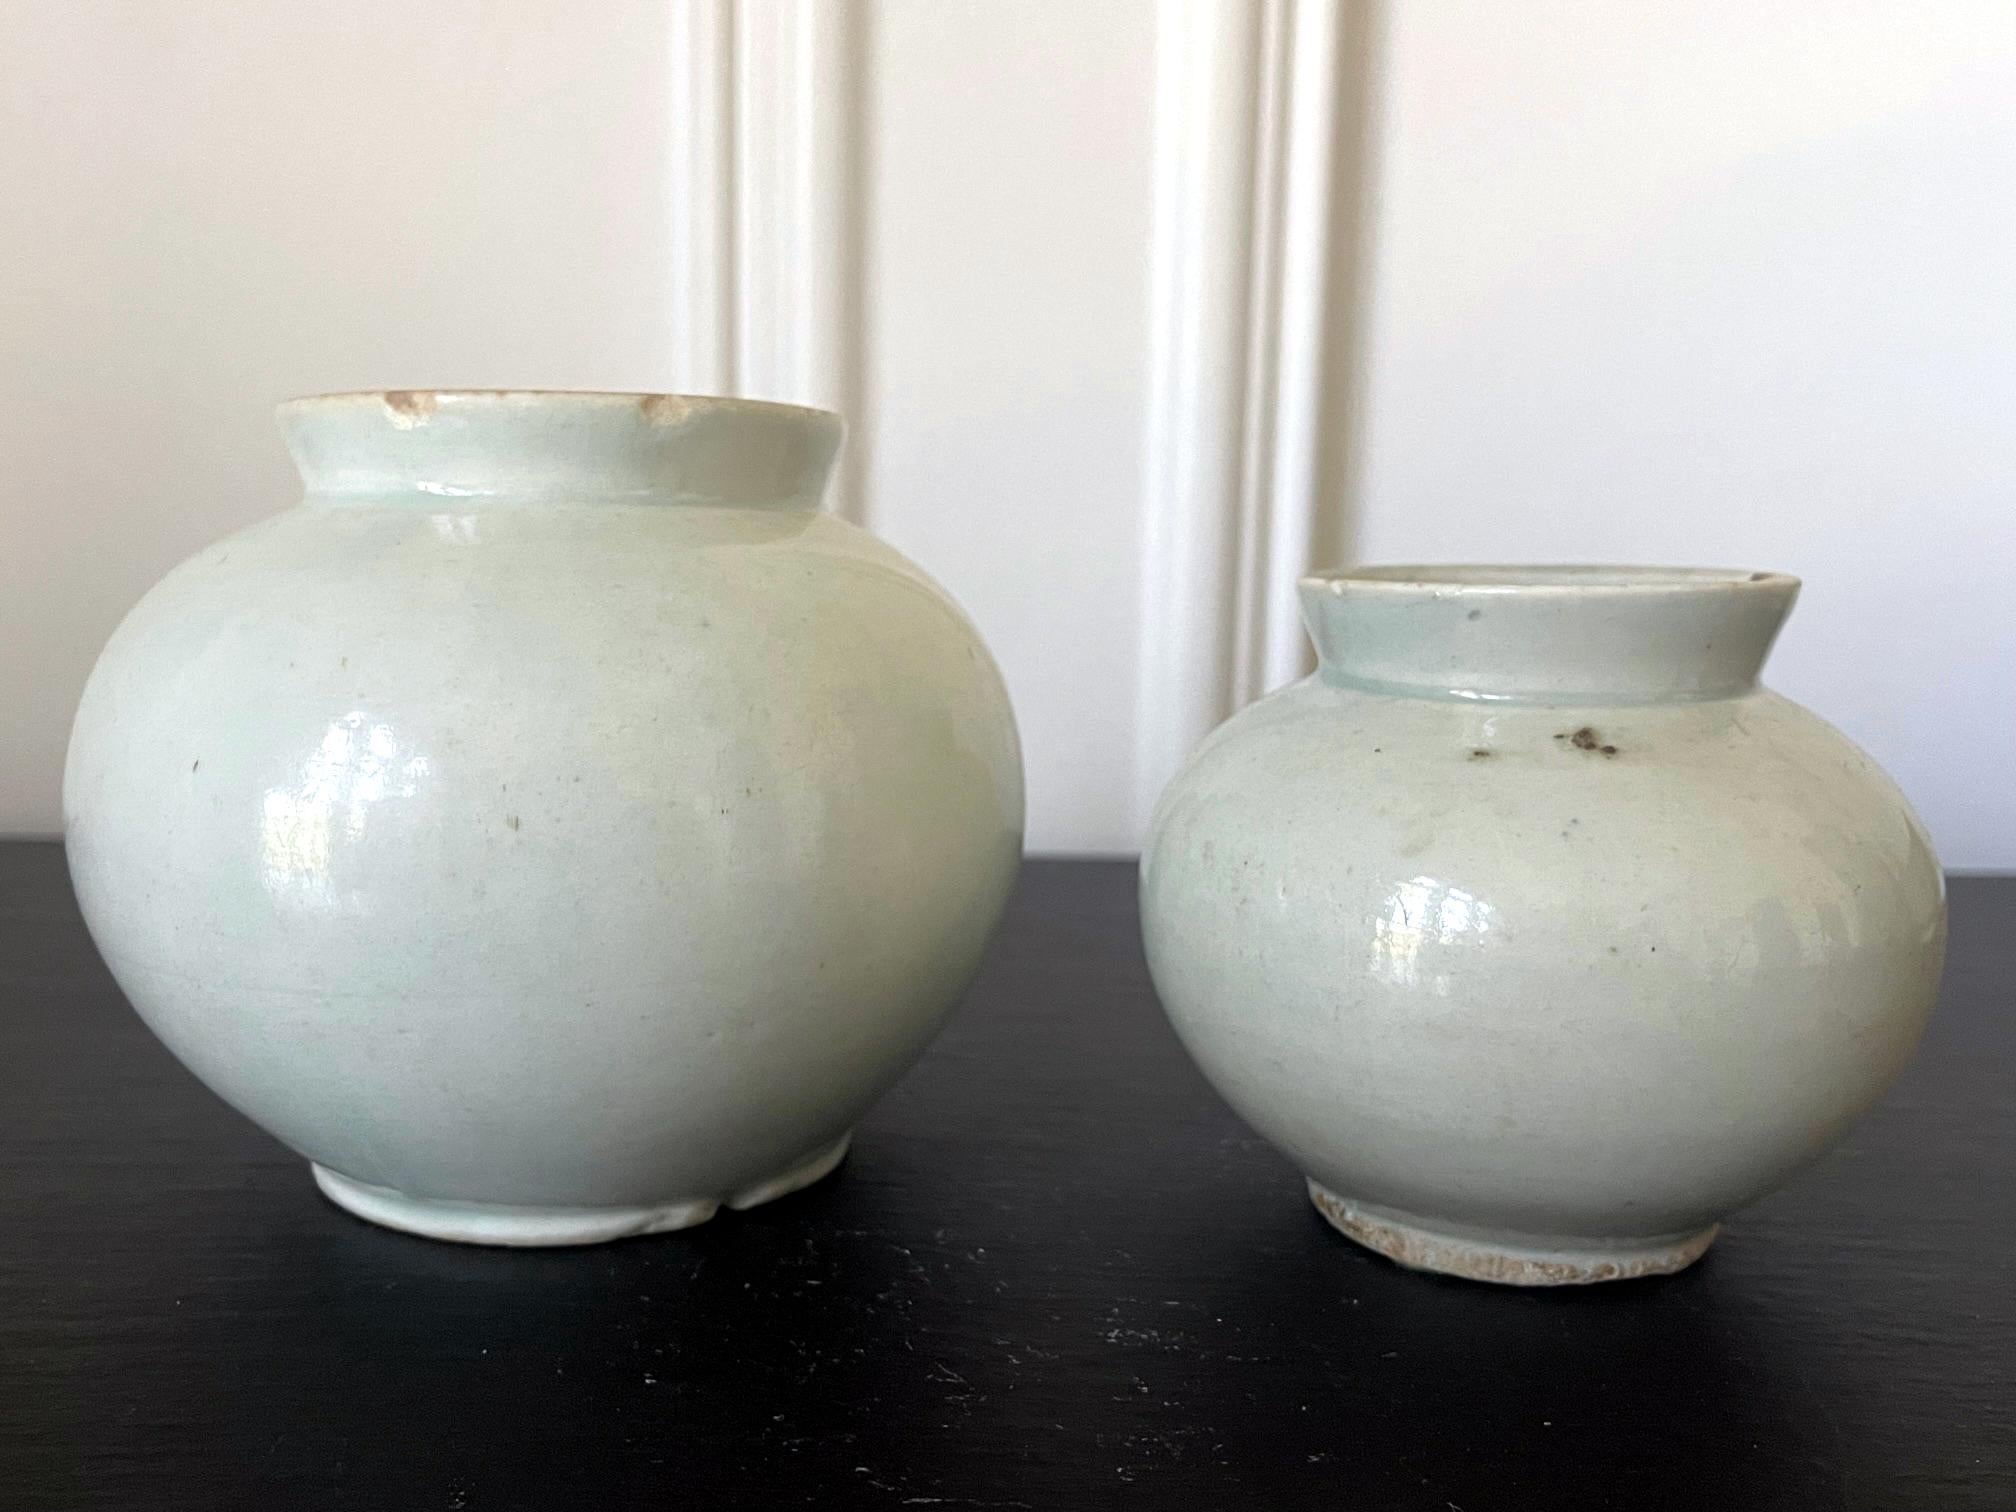 joseon dynasty ceramics